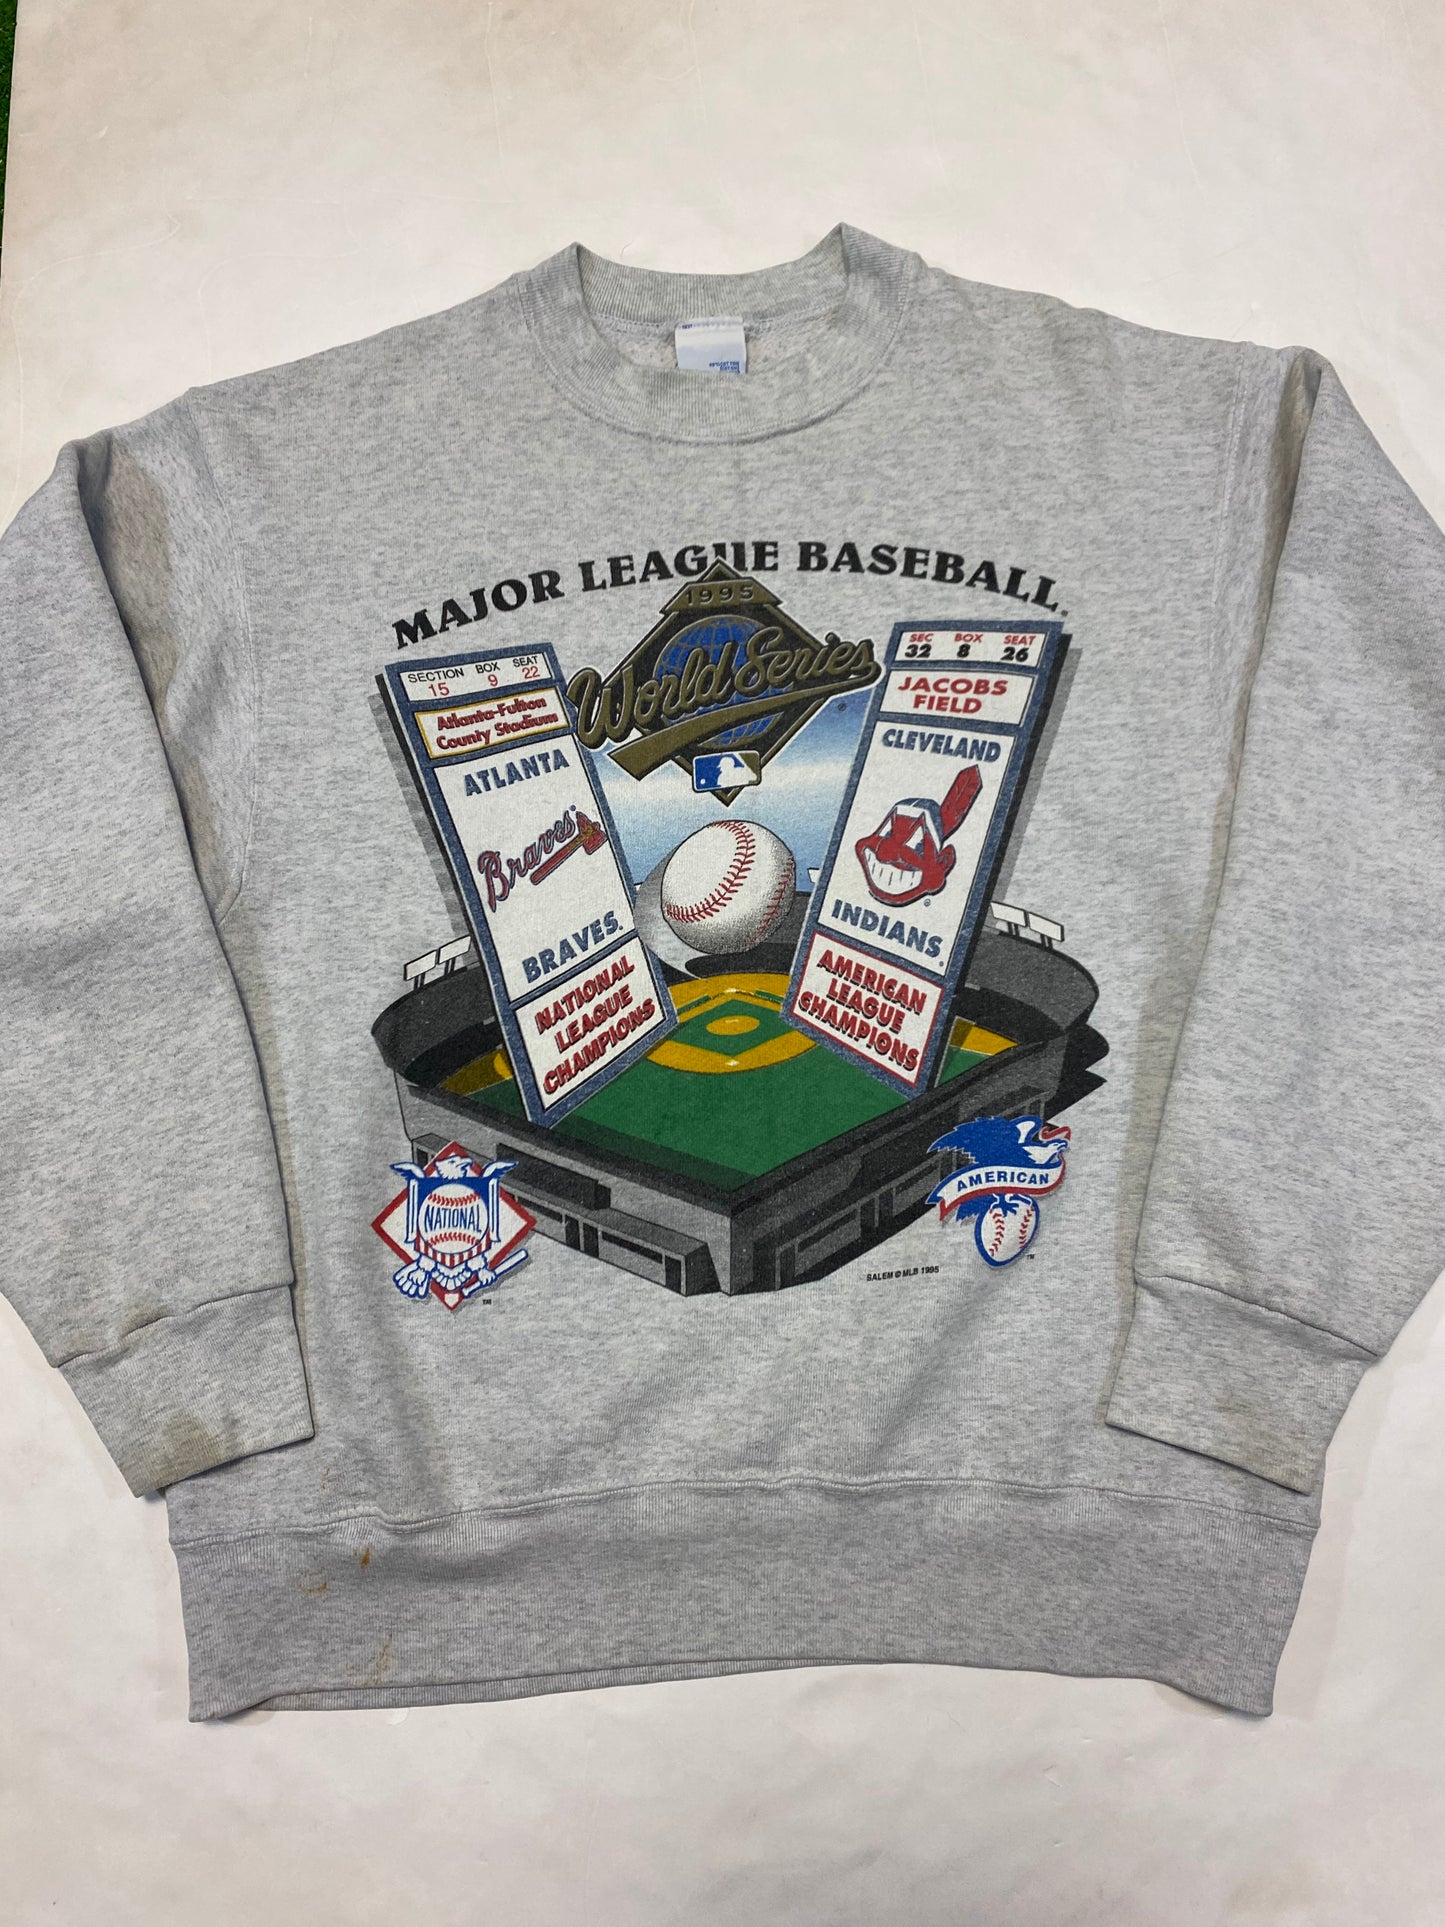 1995 MLB World Series Salem Youth Sweatshirt